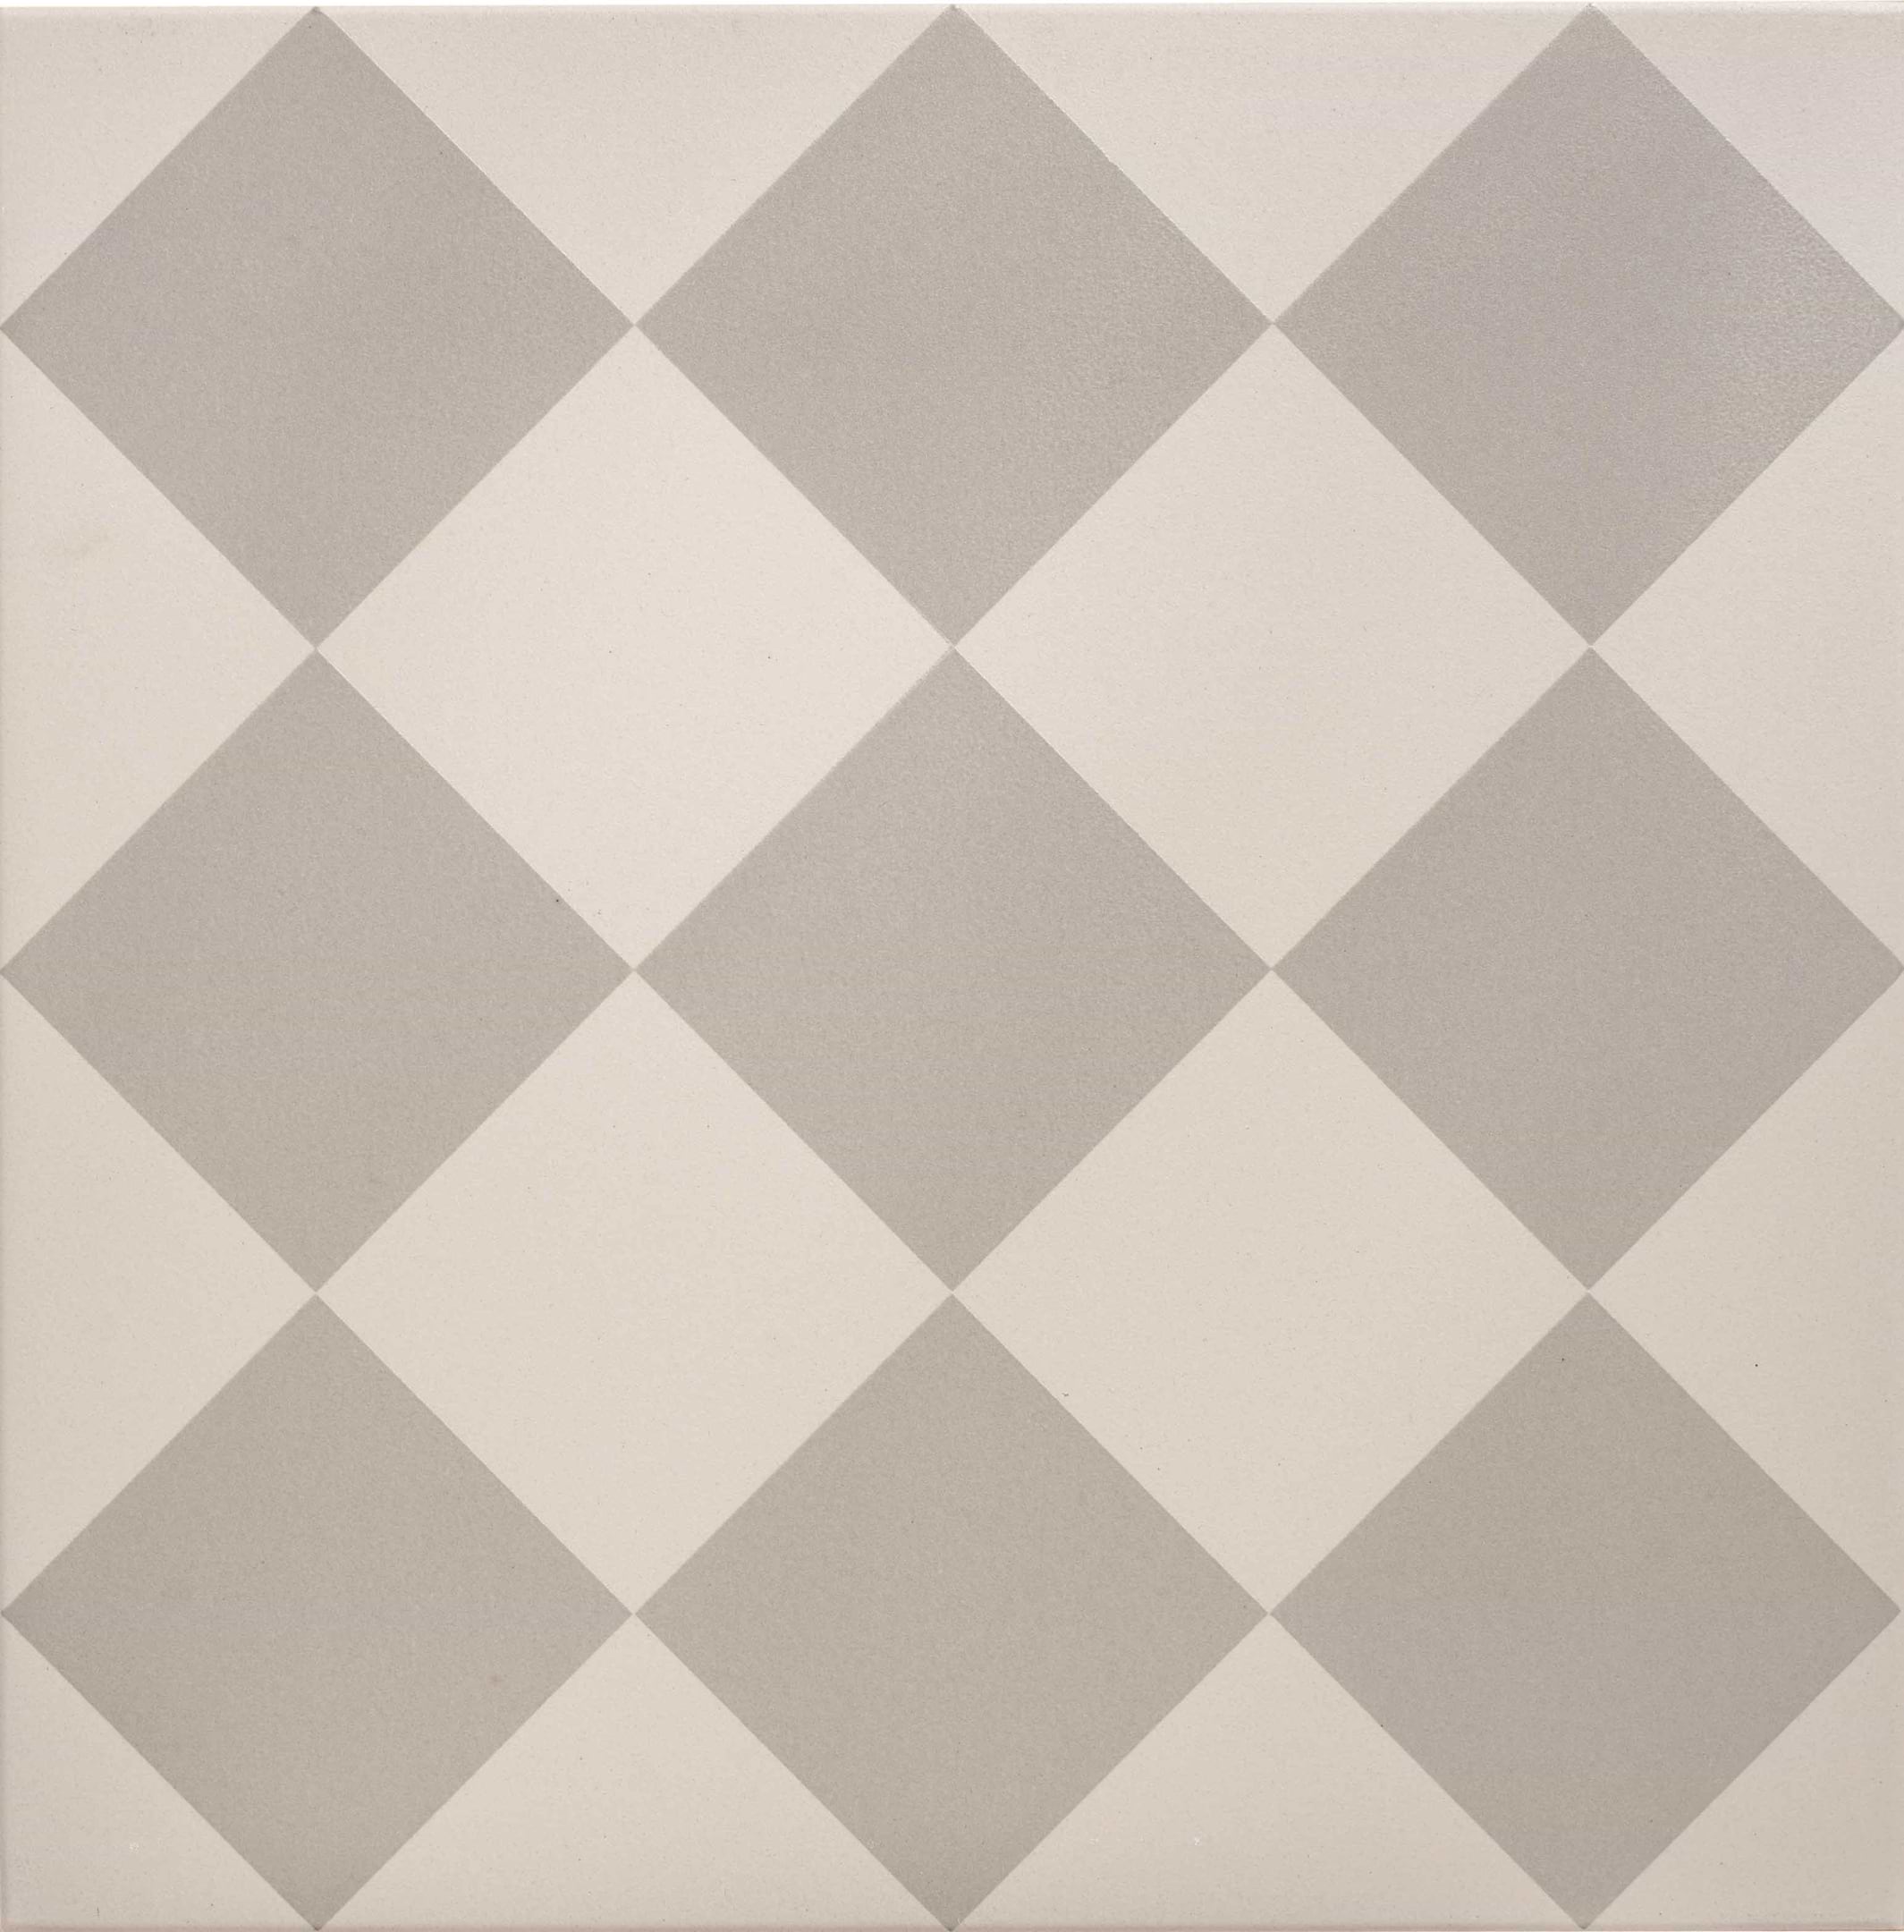 Harlequin Large Grey on Chalk - Hyperion Tiles